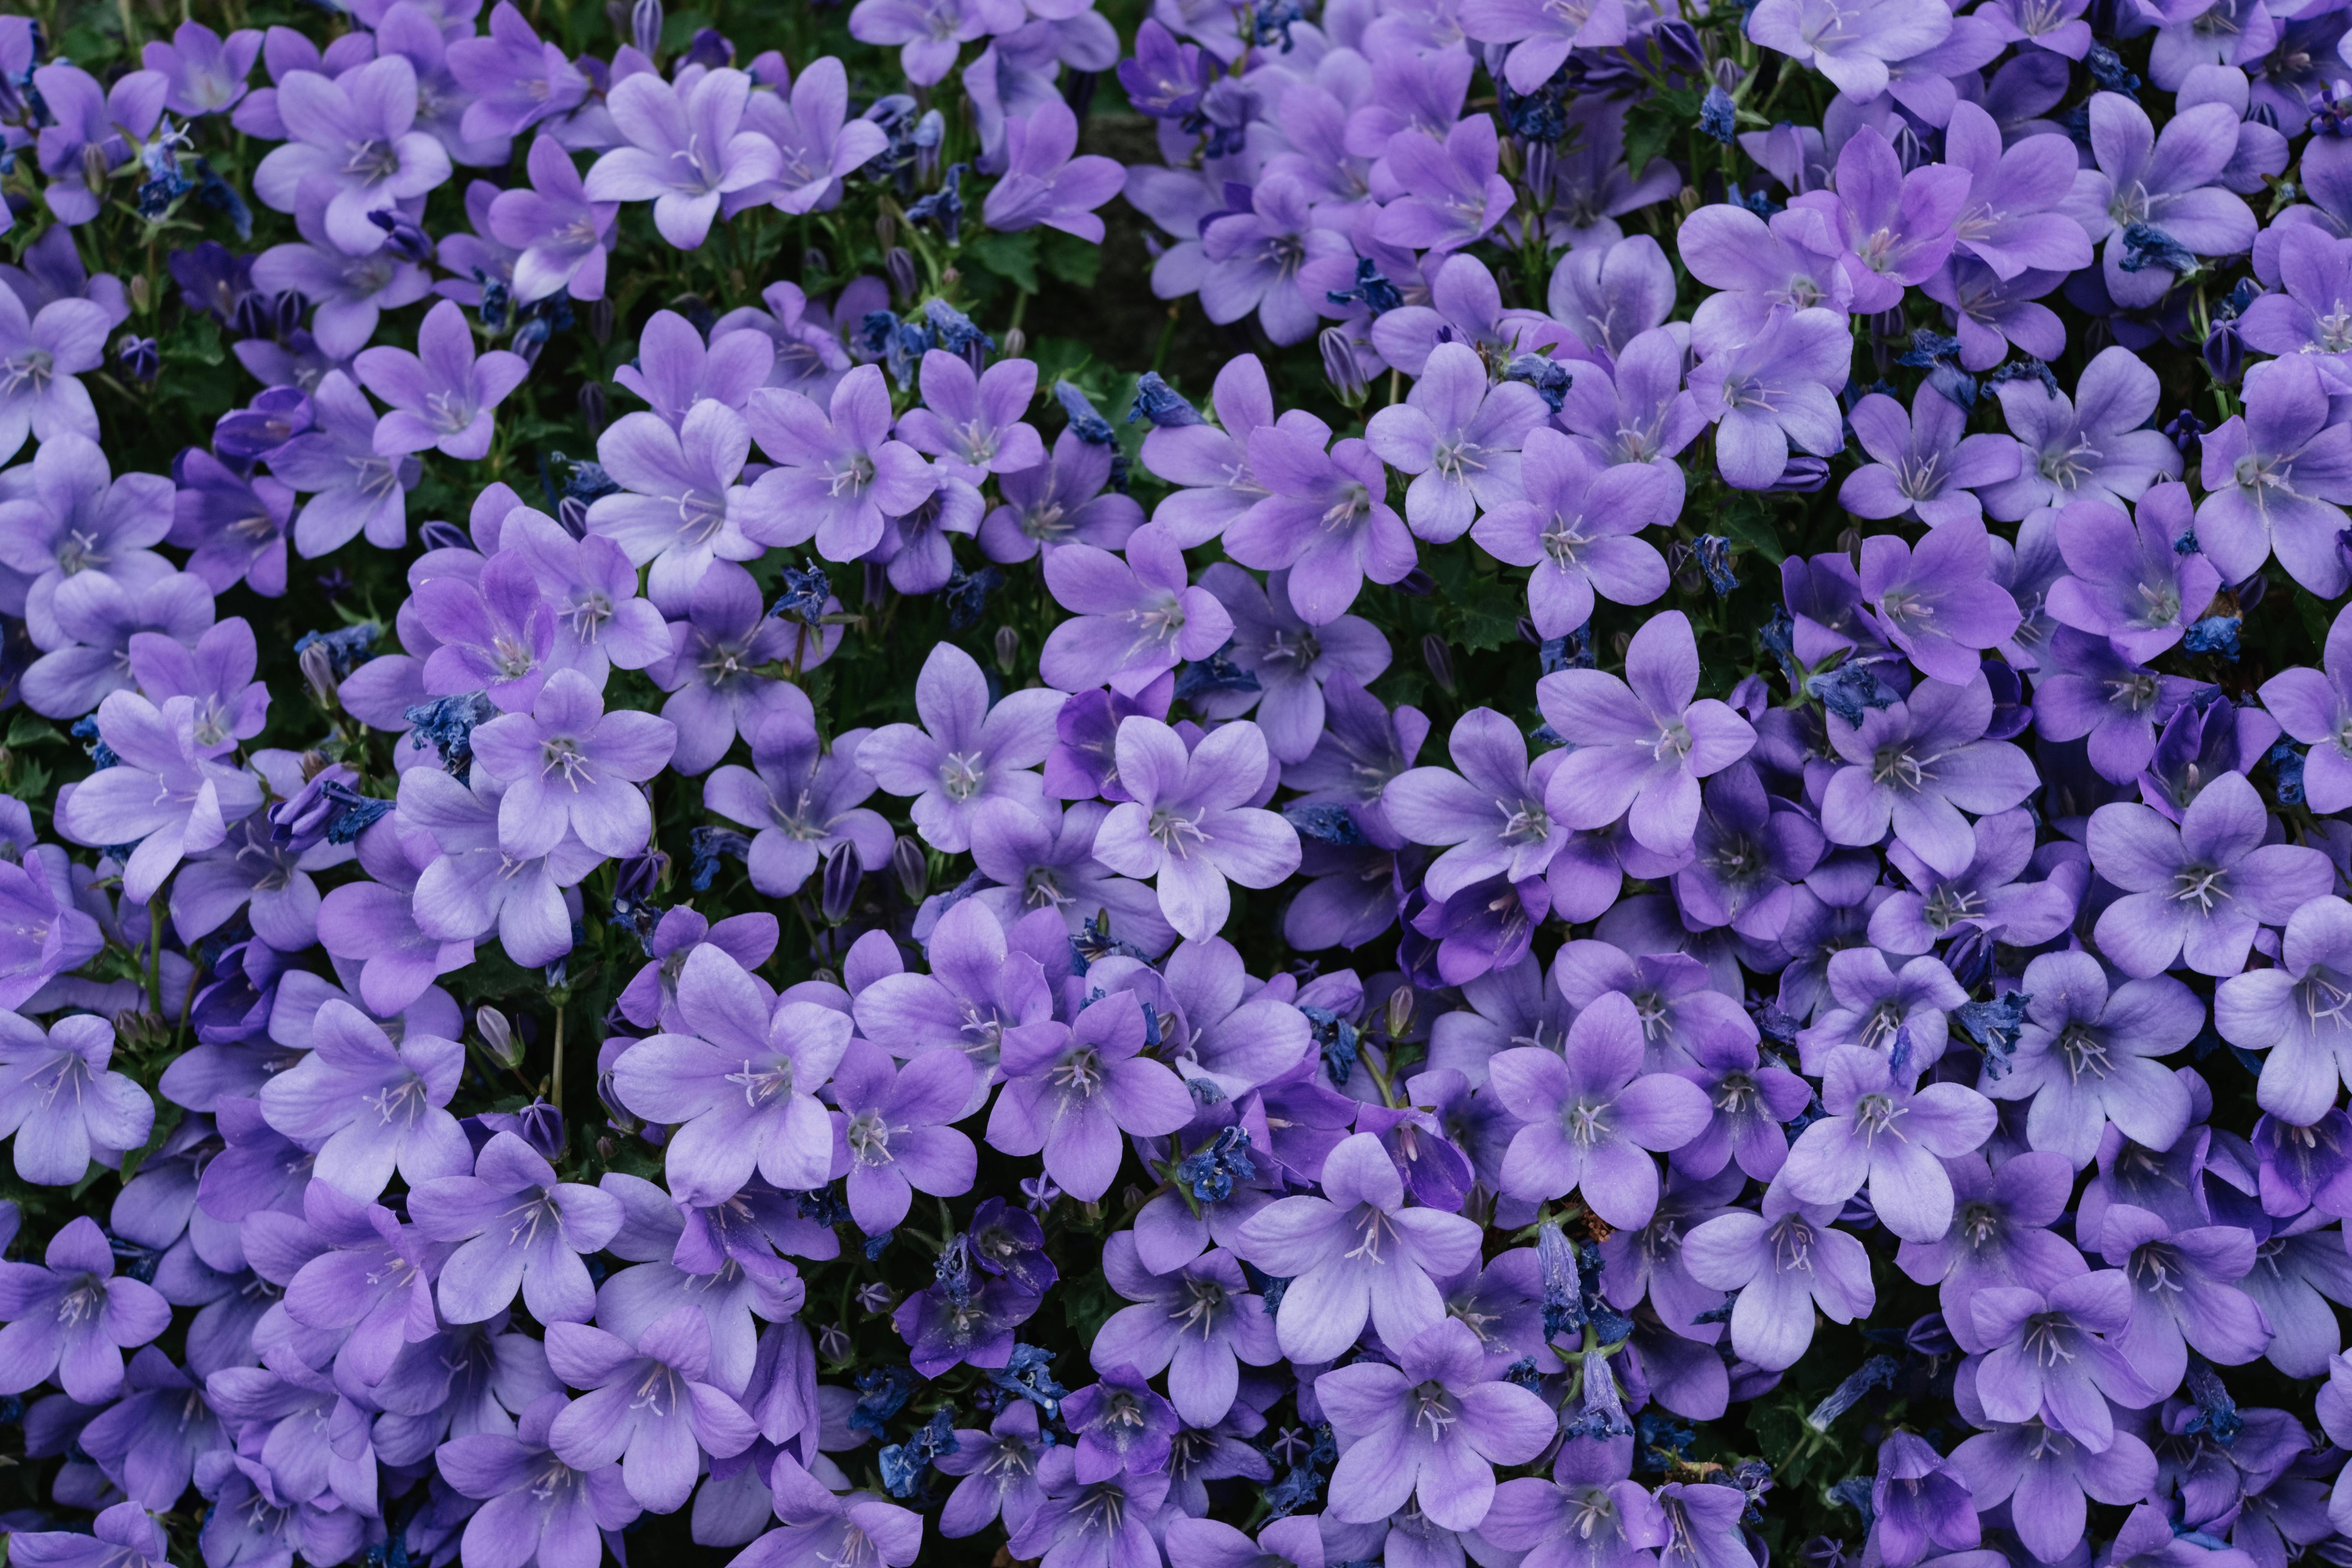 Light Purple Handdrawn Flowers Aesthetic Desktop Computer Wallpaper  Background Backgrounds  PSD Free Download  Pikbest